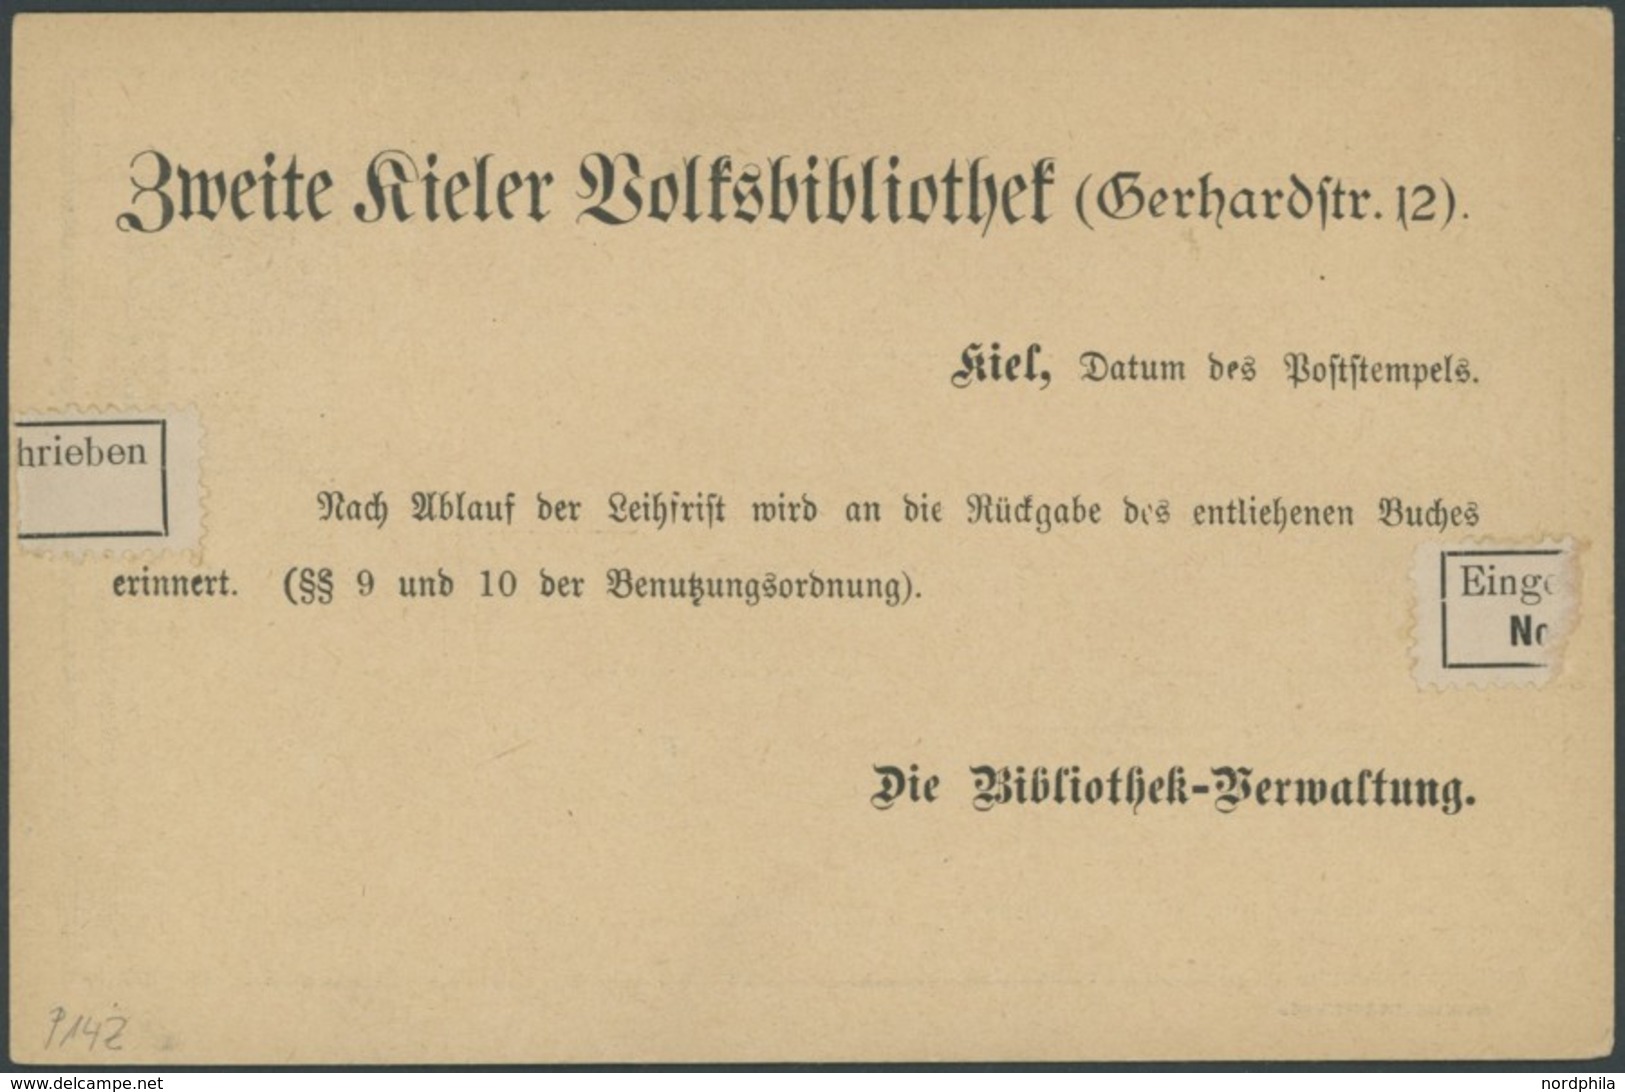 KIEL A P 14Z BRIEF, COURIER: 1900, 2 Pf. Grün Mit Rückseitigem Zudruck Zweite Kieler Volksbibliothek, Stempel 31.3.00, B - Private & Local Mails